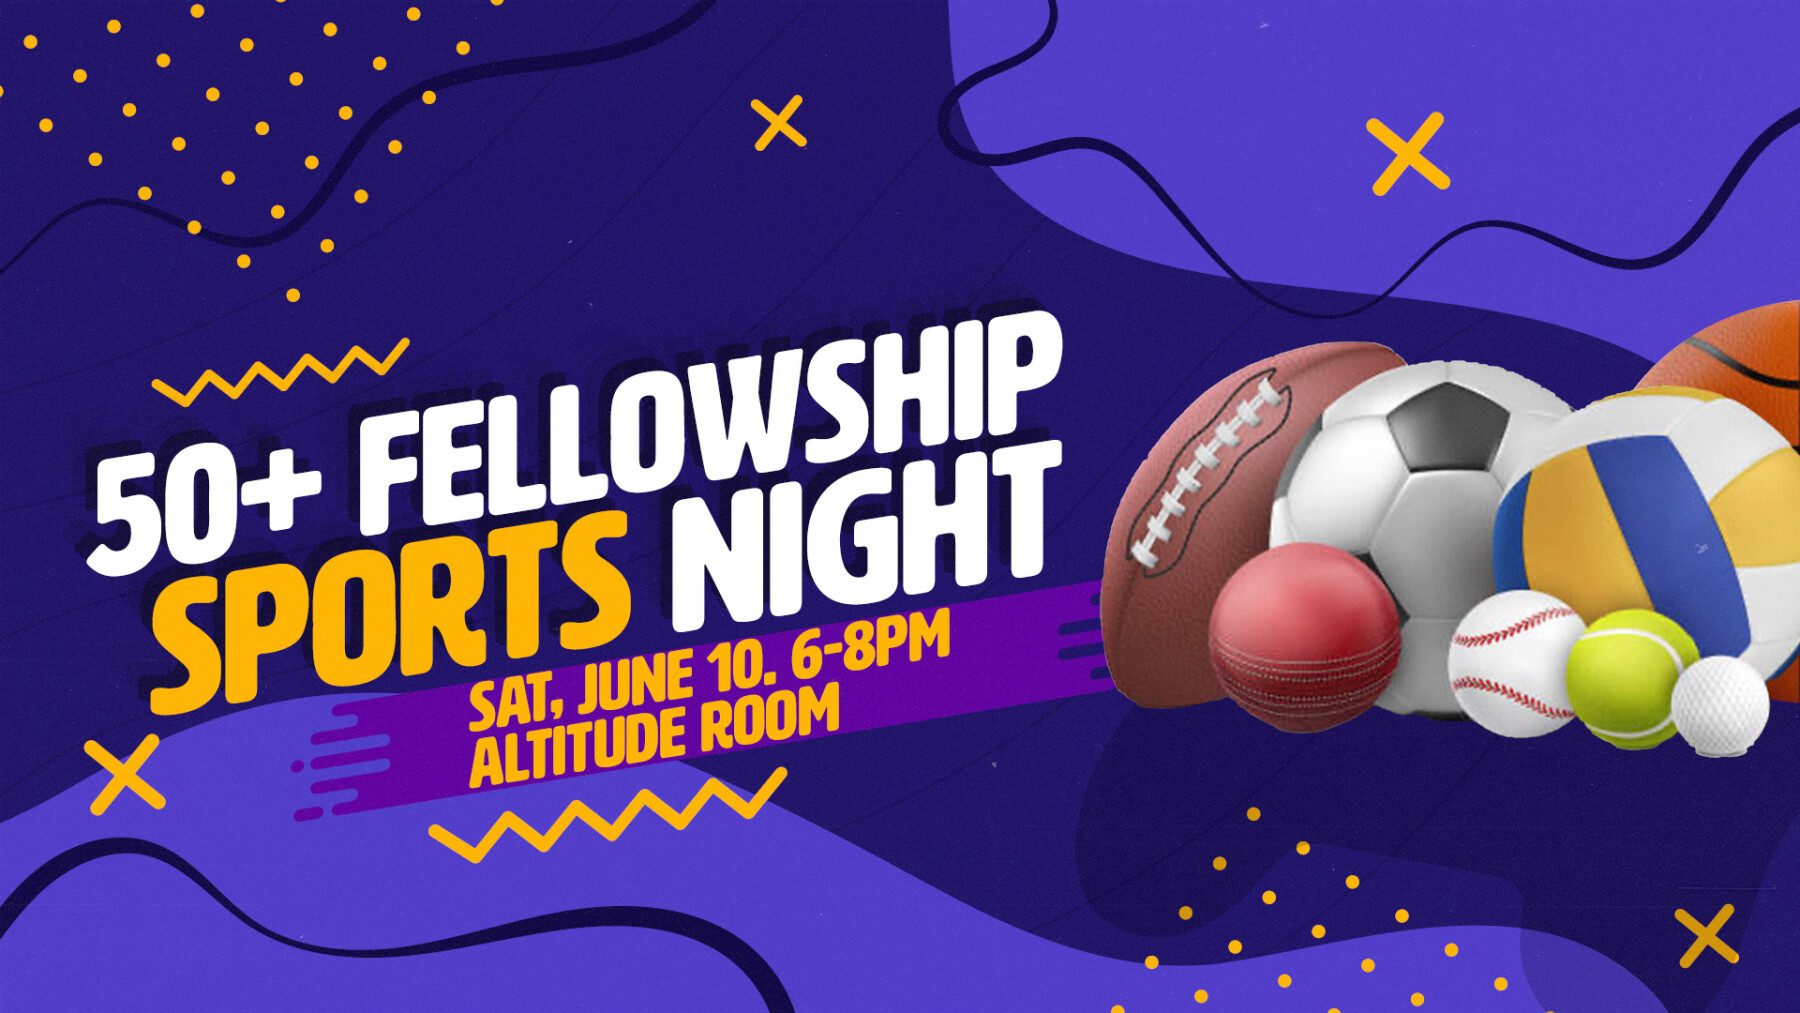 50+ Fellowship: Sports Night